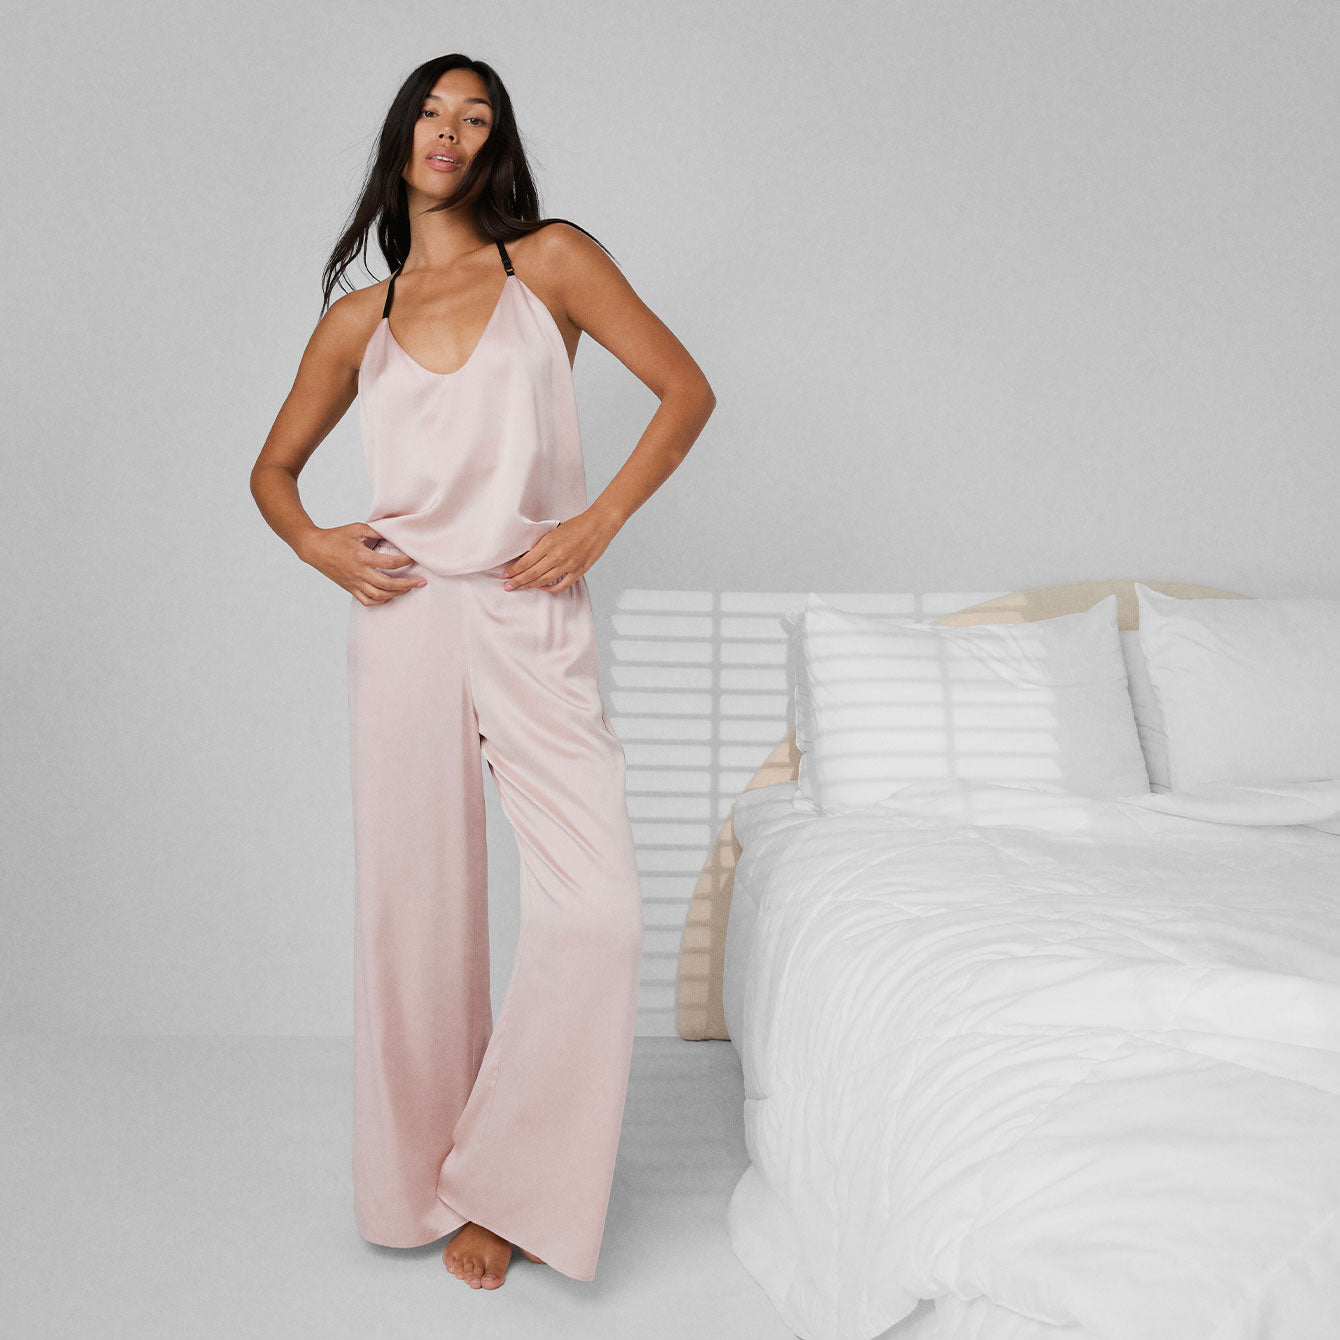 Lunya Pajamas Washable Silk Cami Pant Set - #Delicate Pink/Immersed Black